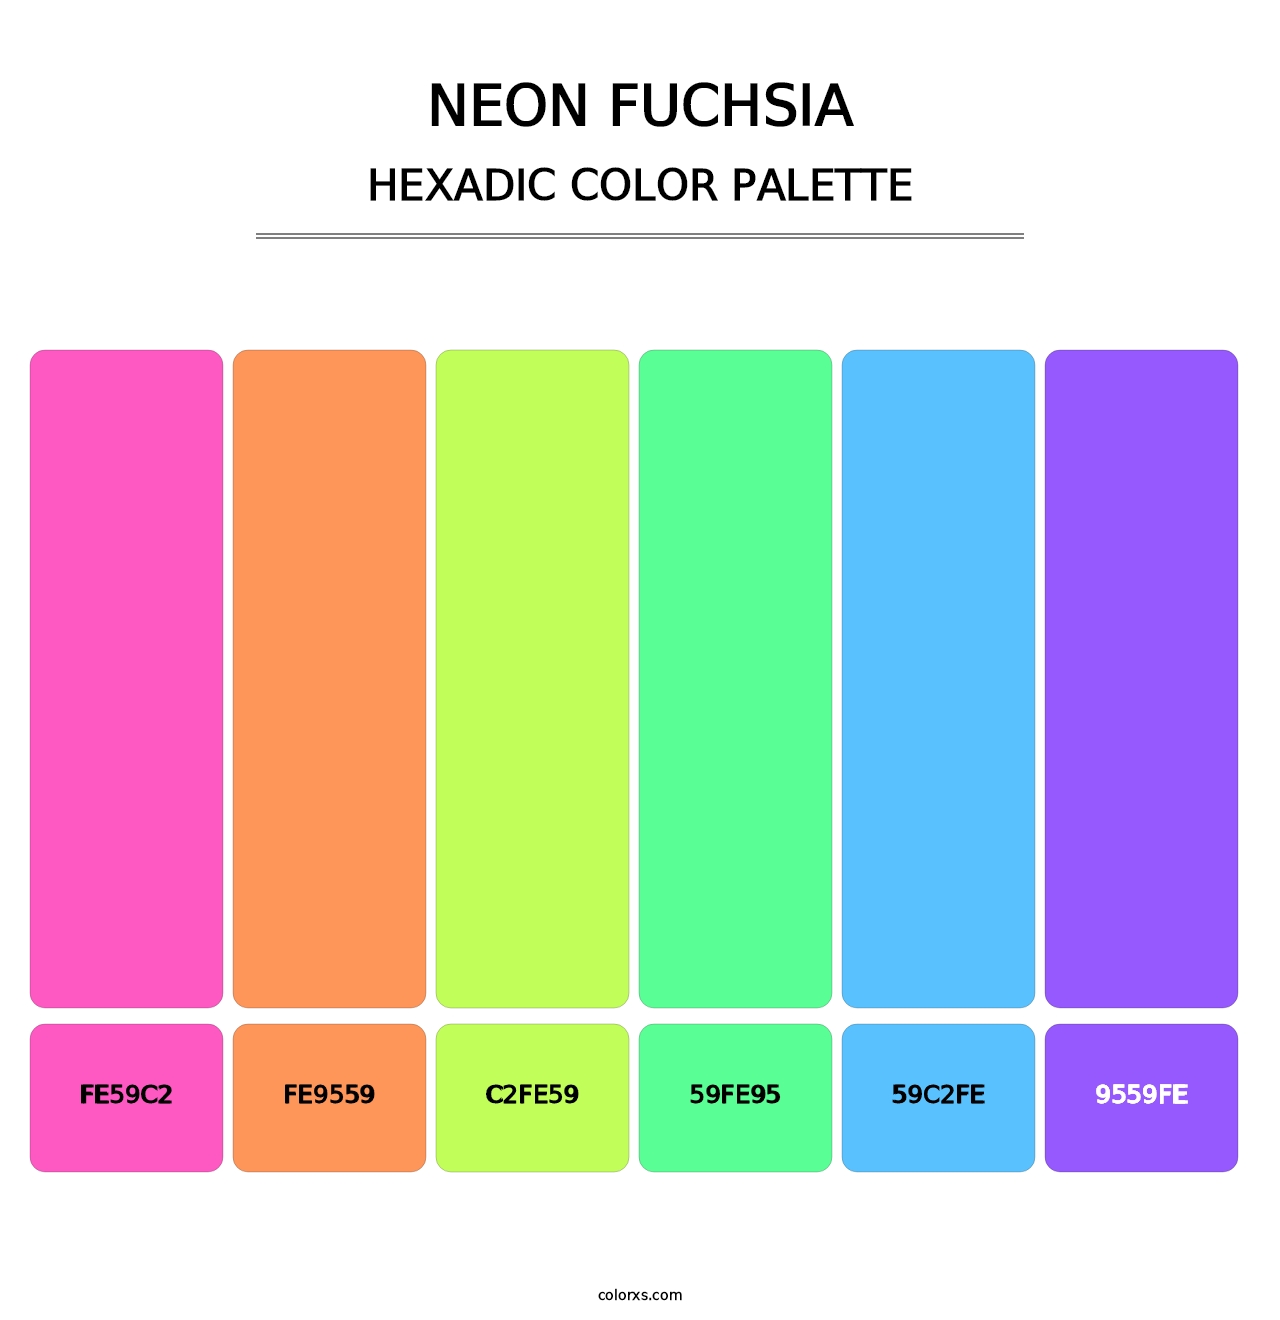 Neon Fuchsia - Hexadic Color Palette